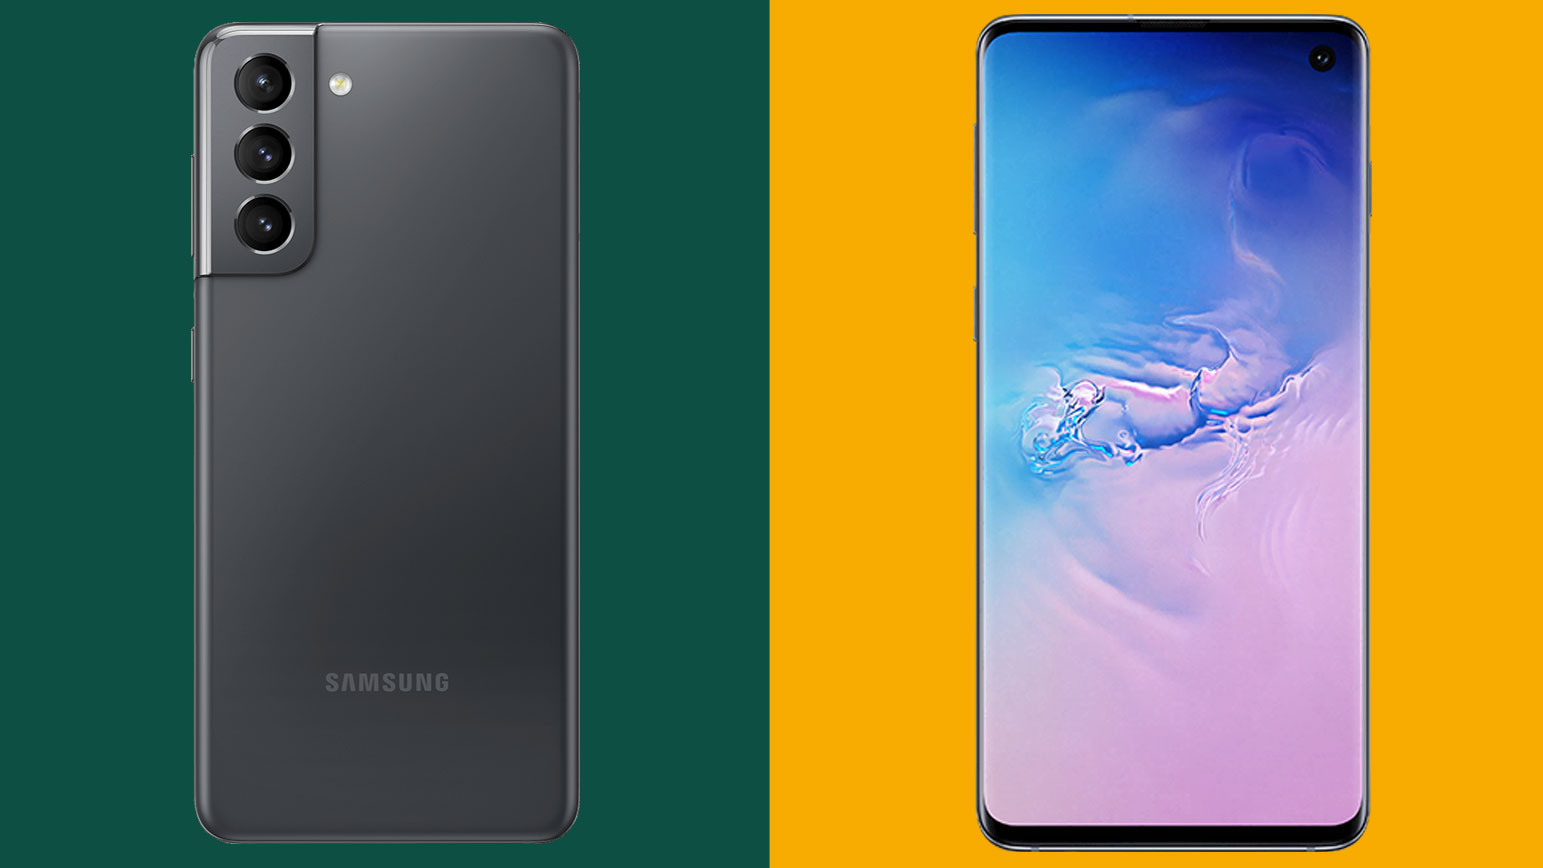 Samsung Galaxy S21 Vs Samsung Galaxy S10 21 S Android Phone Versus 19 S Techradar